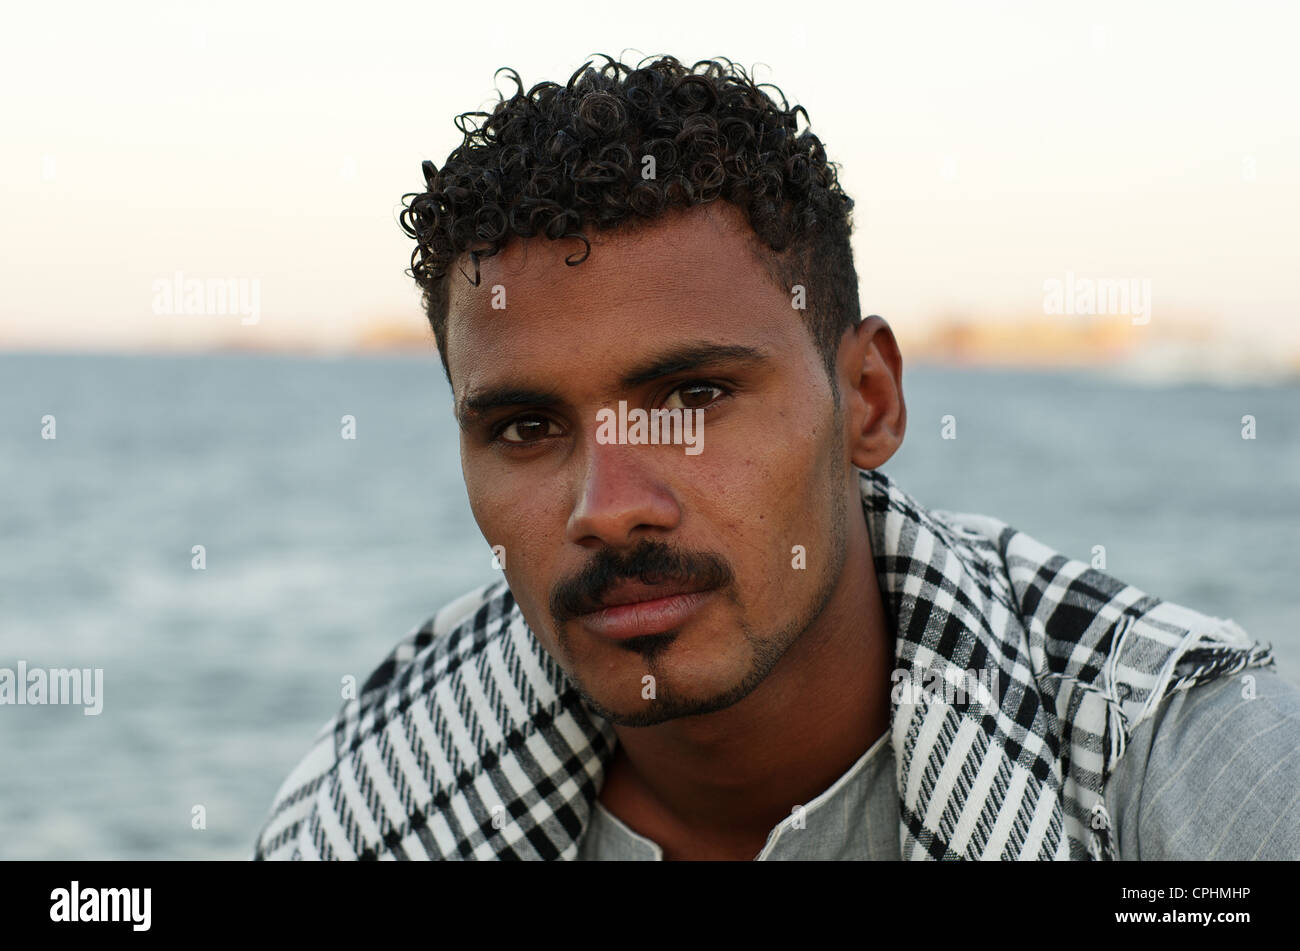 Egyptian Men Stockfotos And Egyptian Men Bilder Alamy